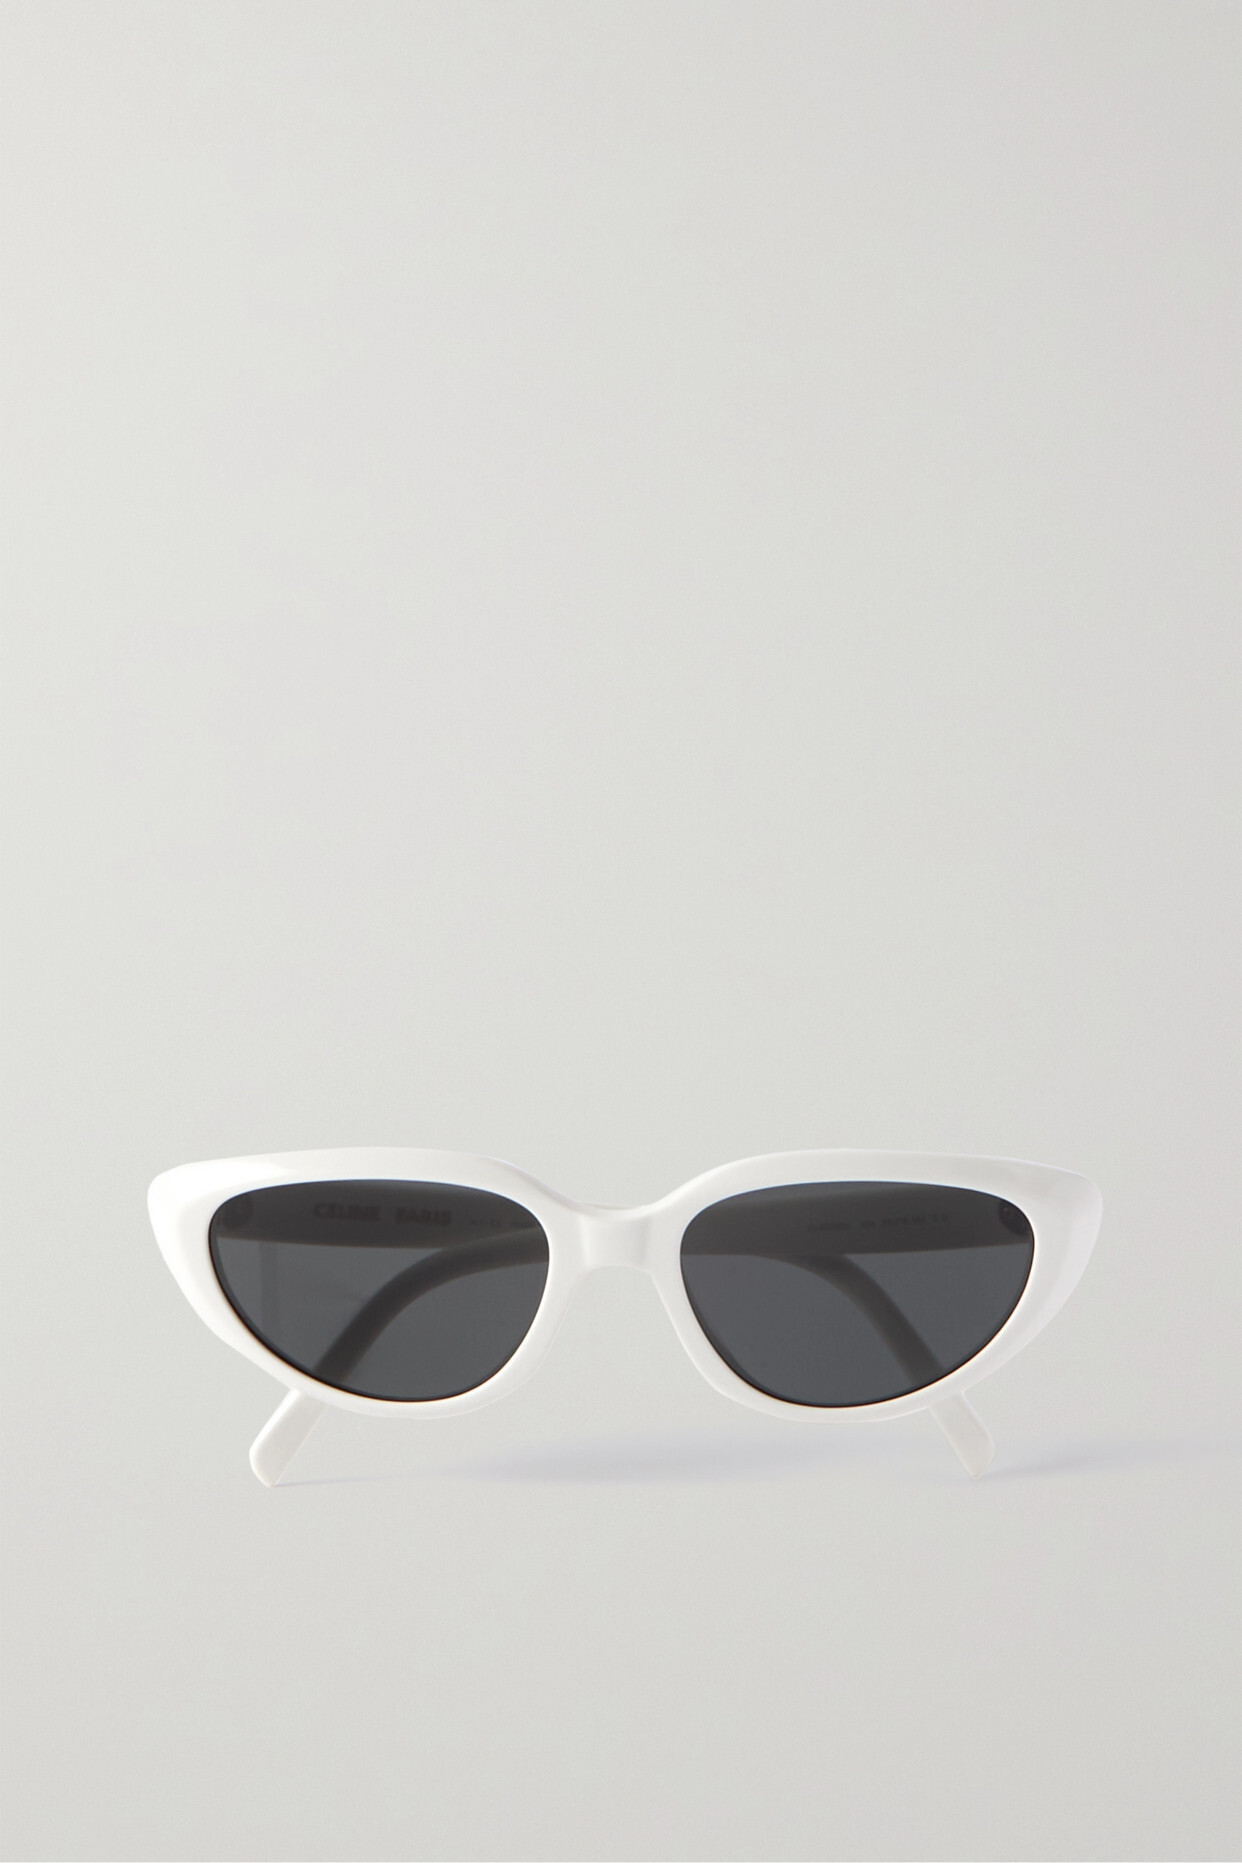 CELINE Eyewear - Cat-eye Acetate Sunglasses - Ivory